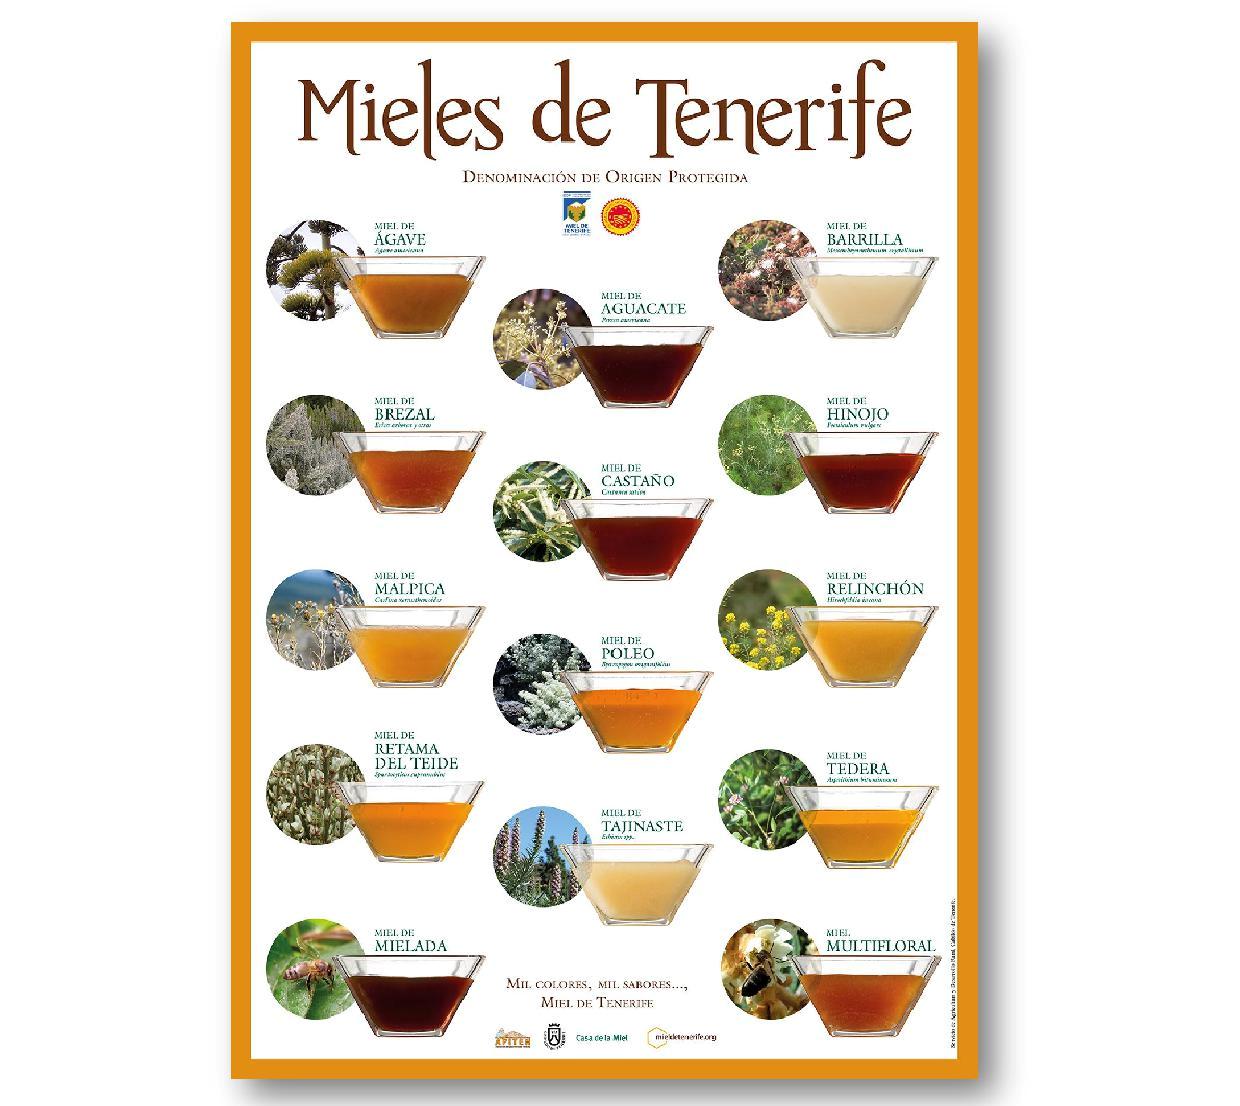 Miel de Tenerife dop caBILDO DE tENERIFE, CASA DE LA mIEL, aPITÉN